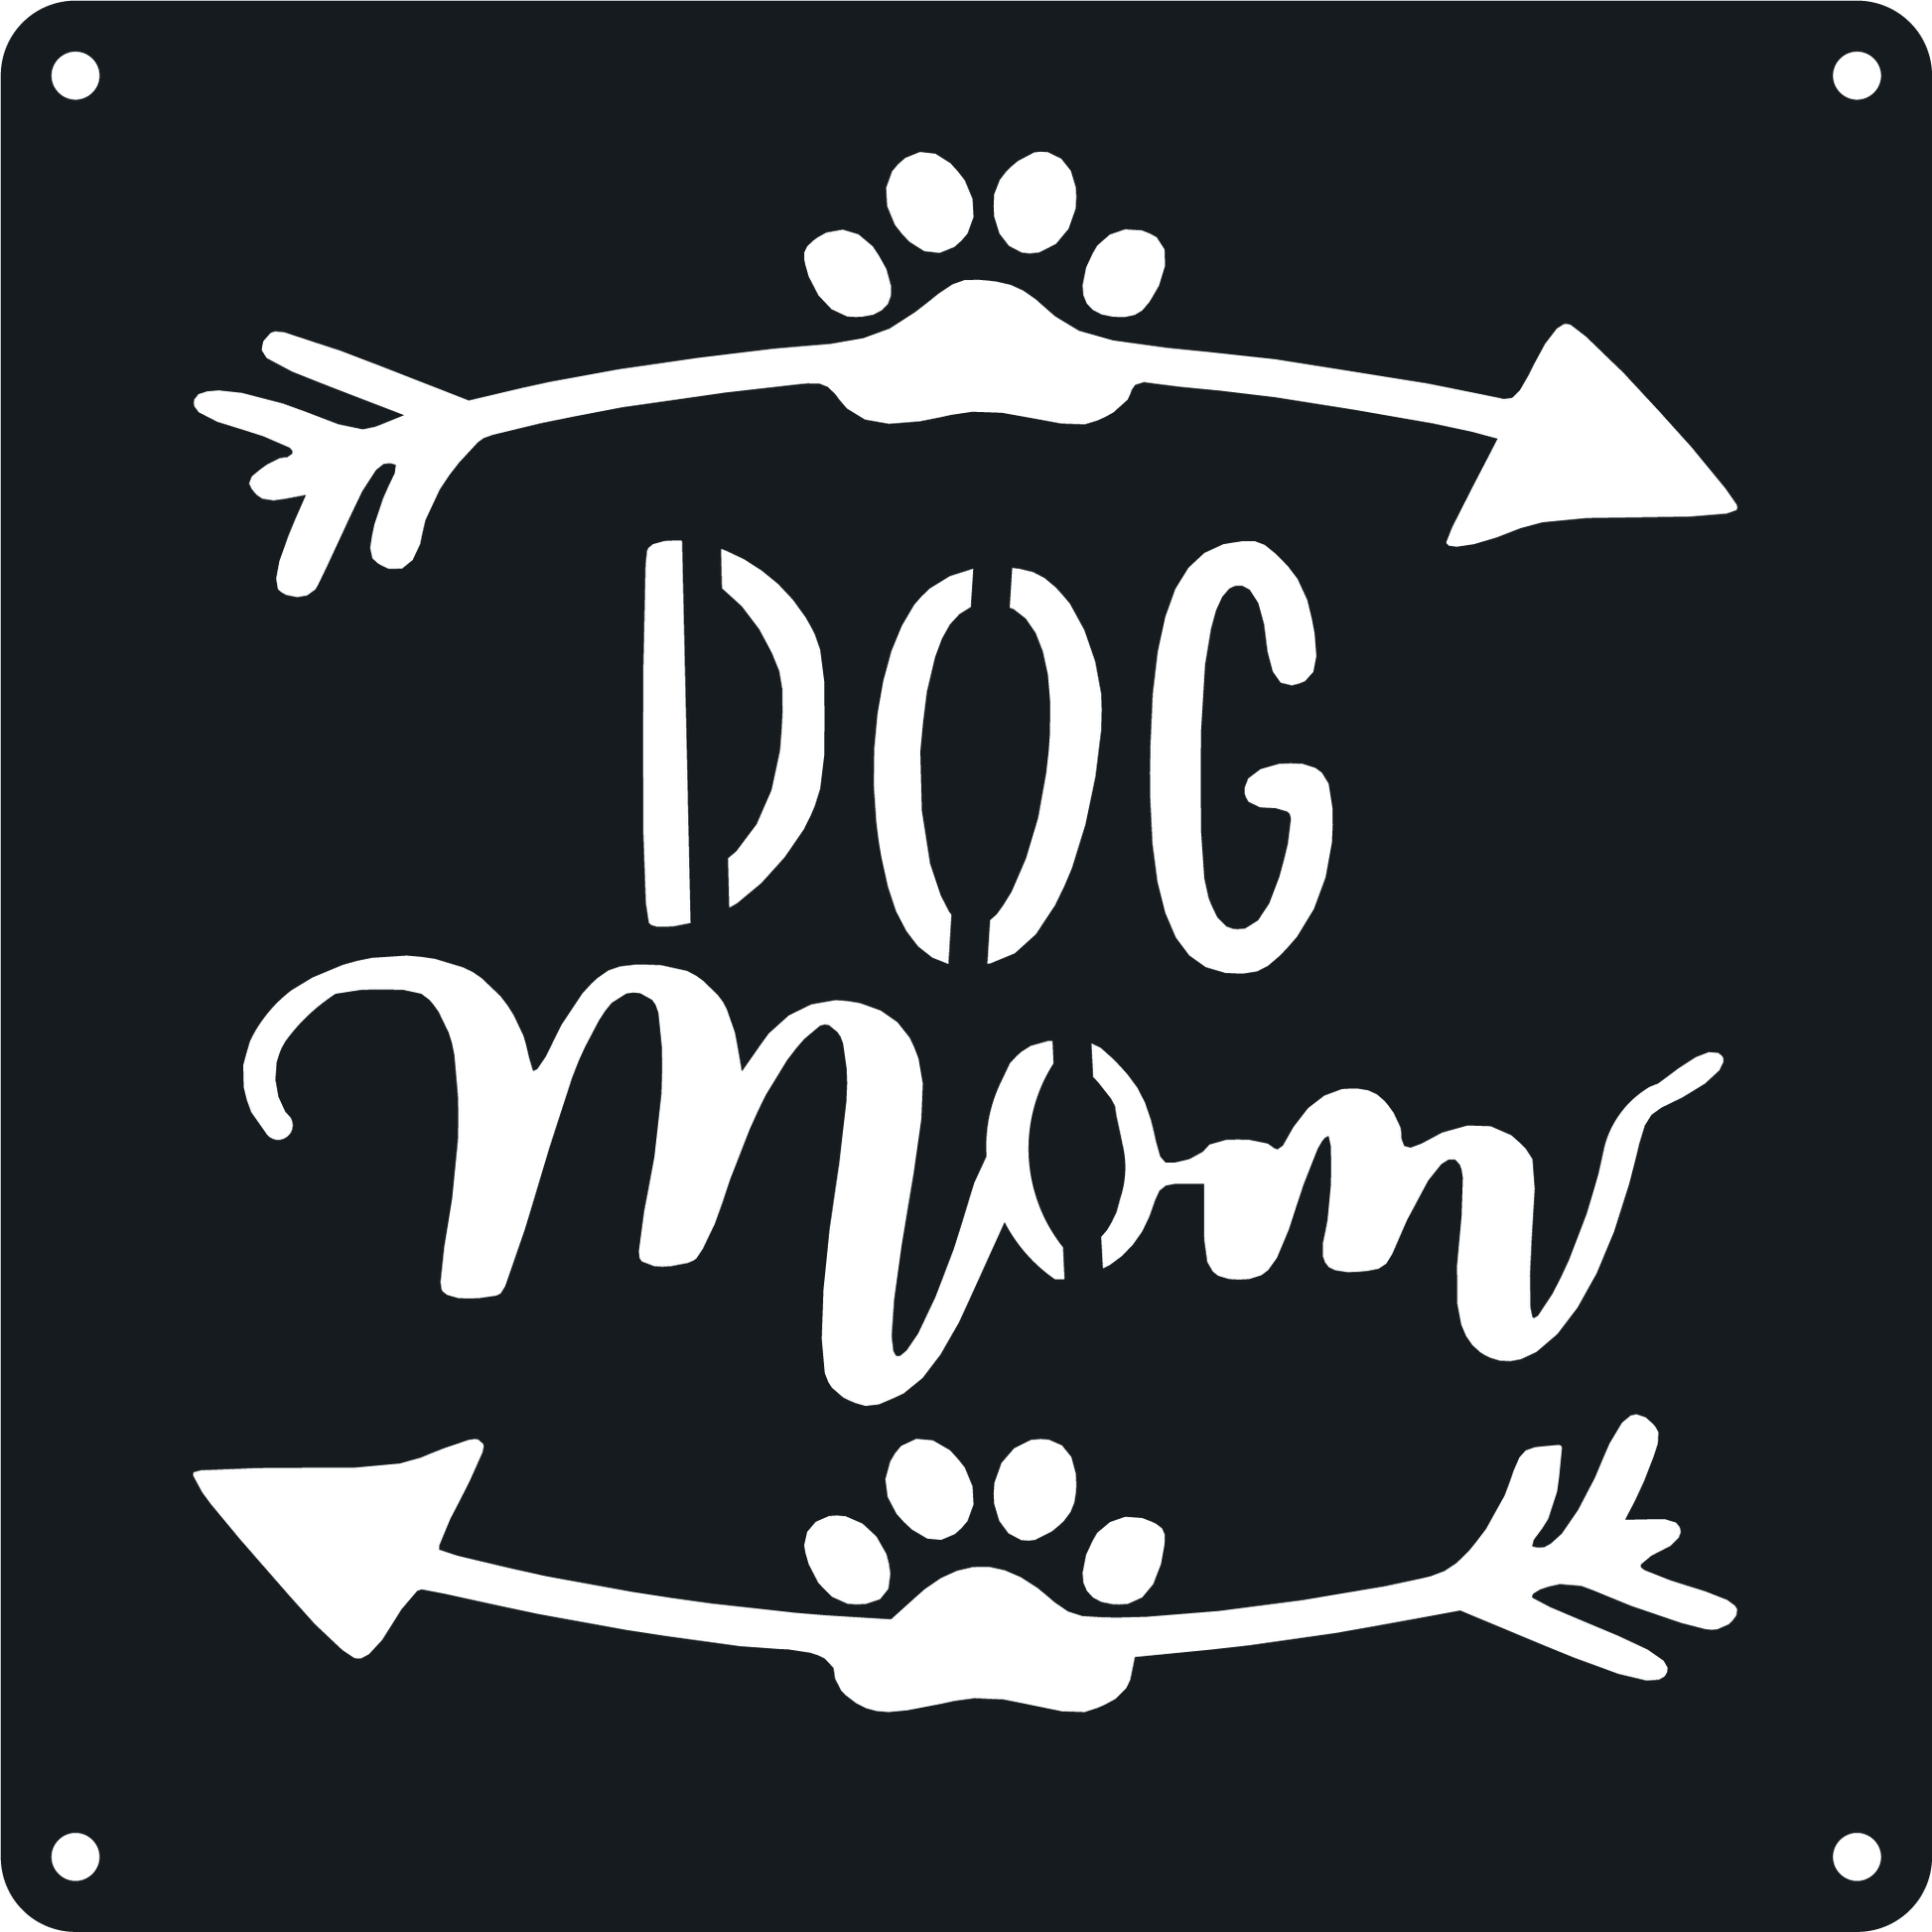 Dog Mom - Metal Wall Art - Badger Steel USA